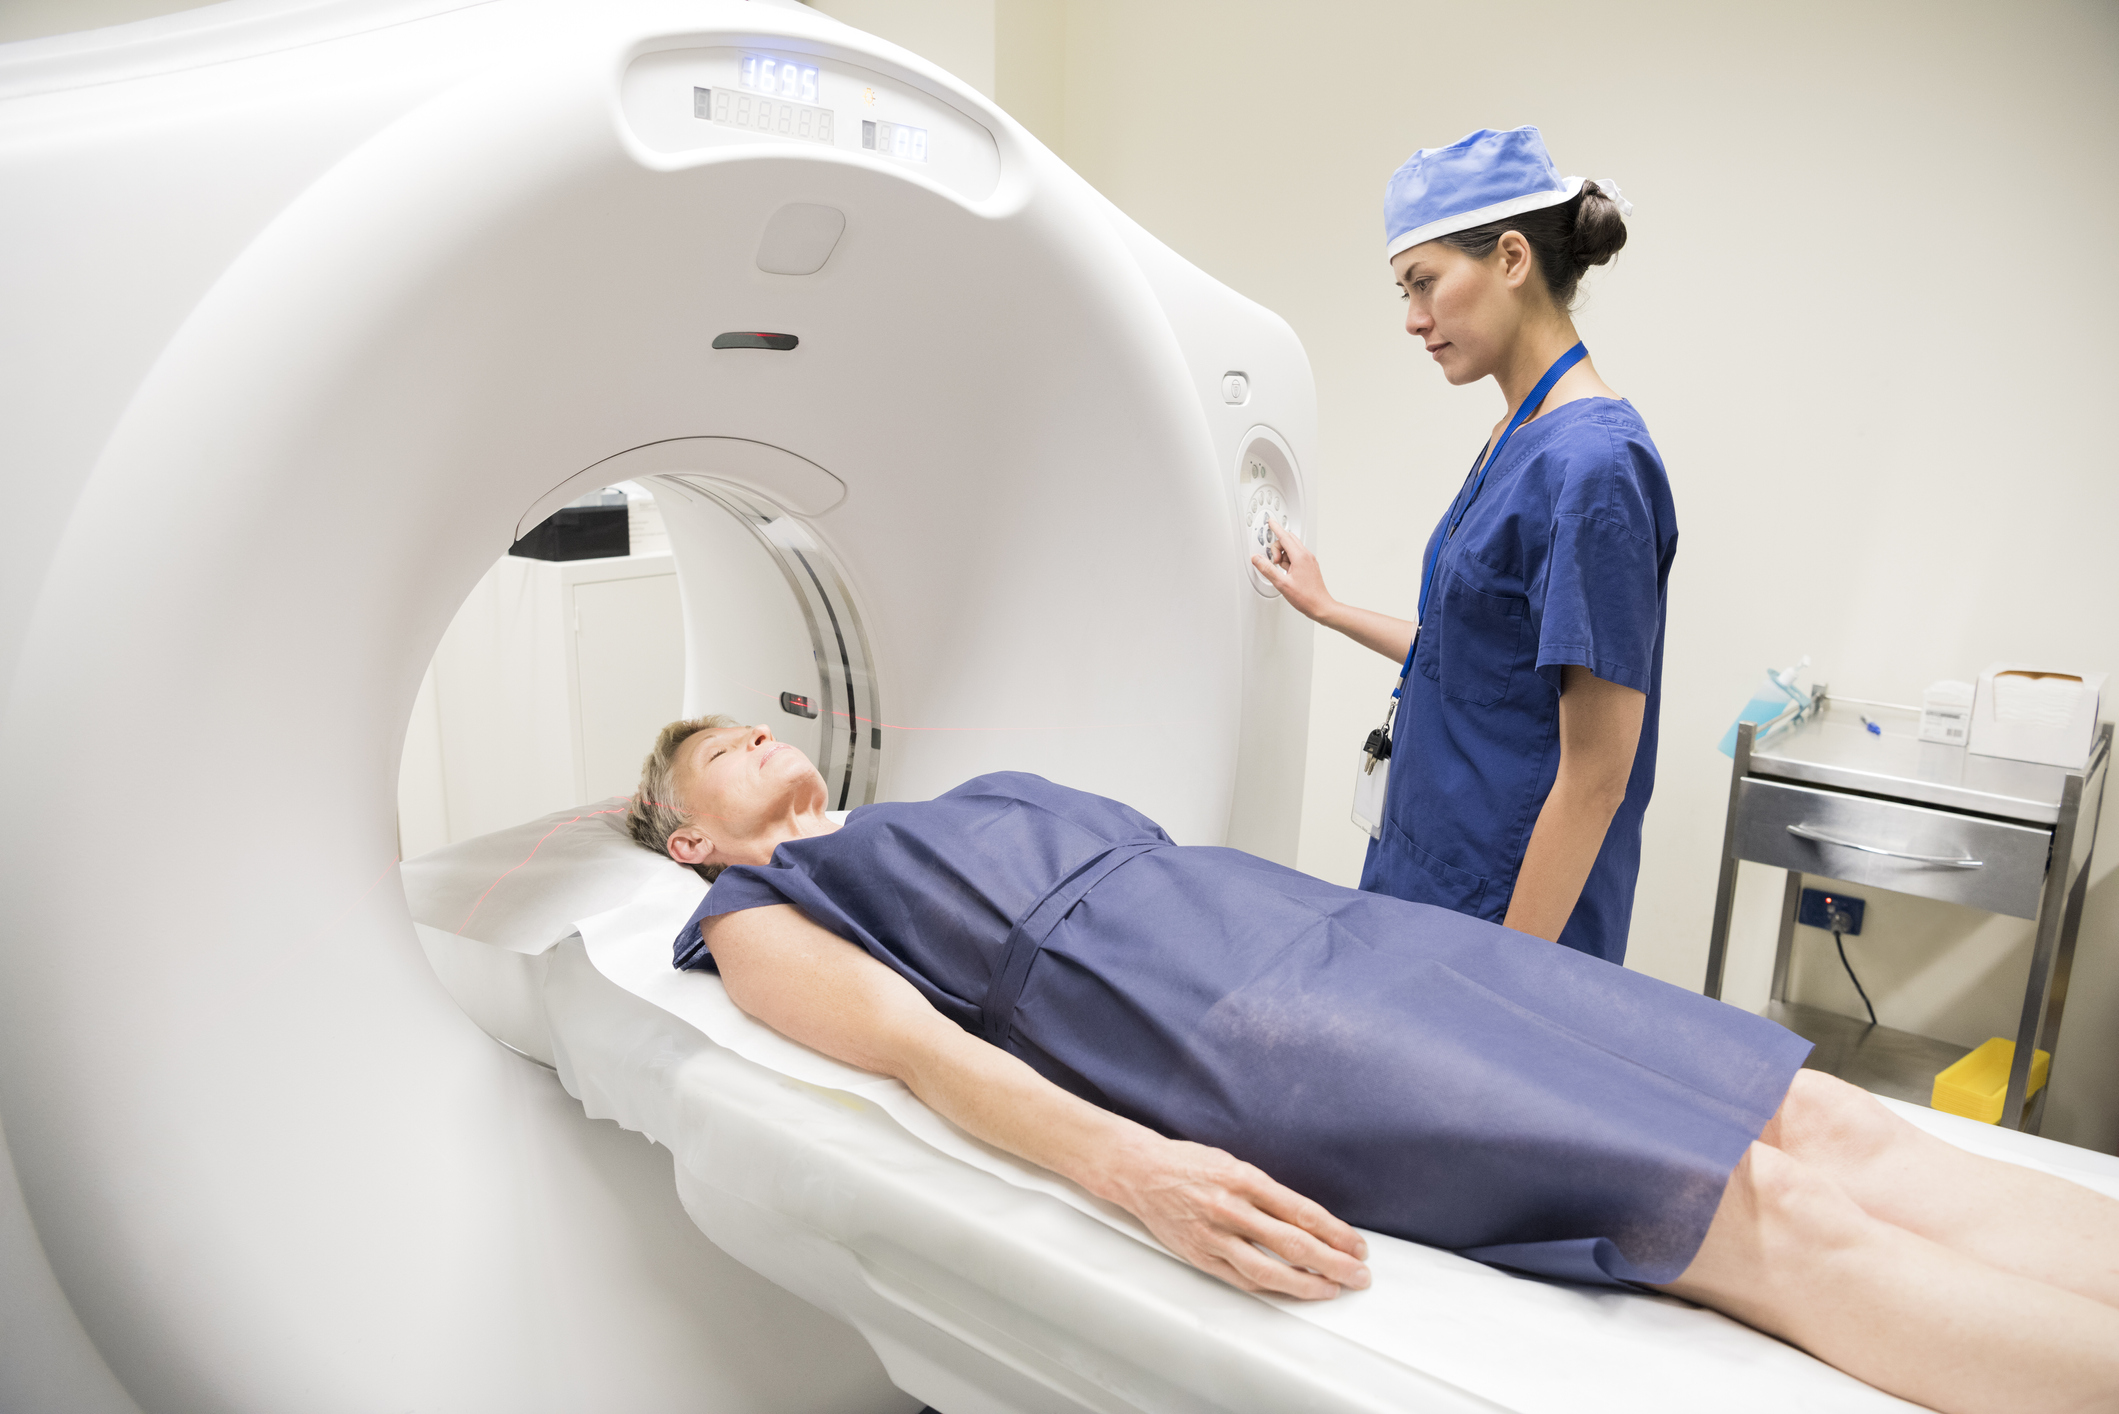 Protecting critical MRI and ICU equipment